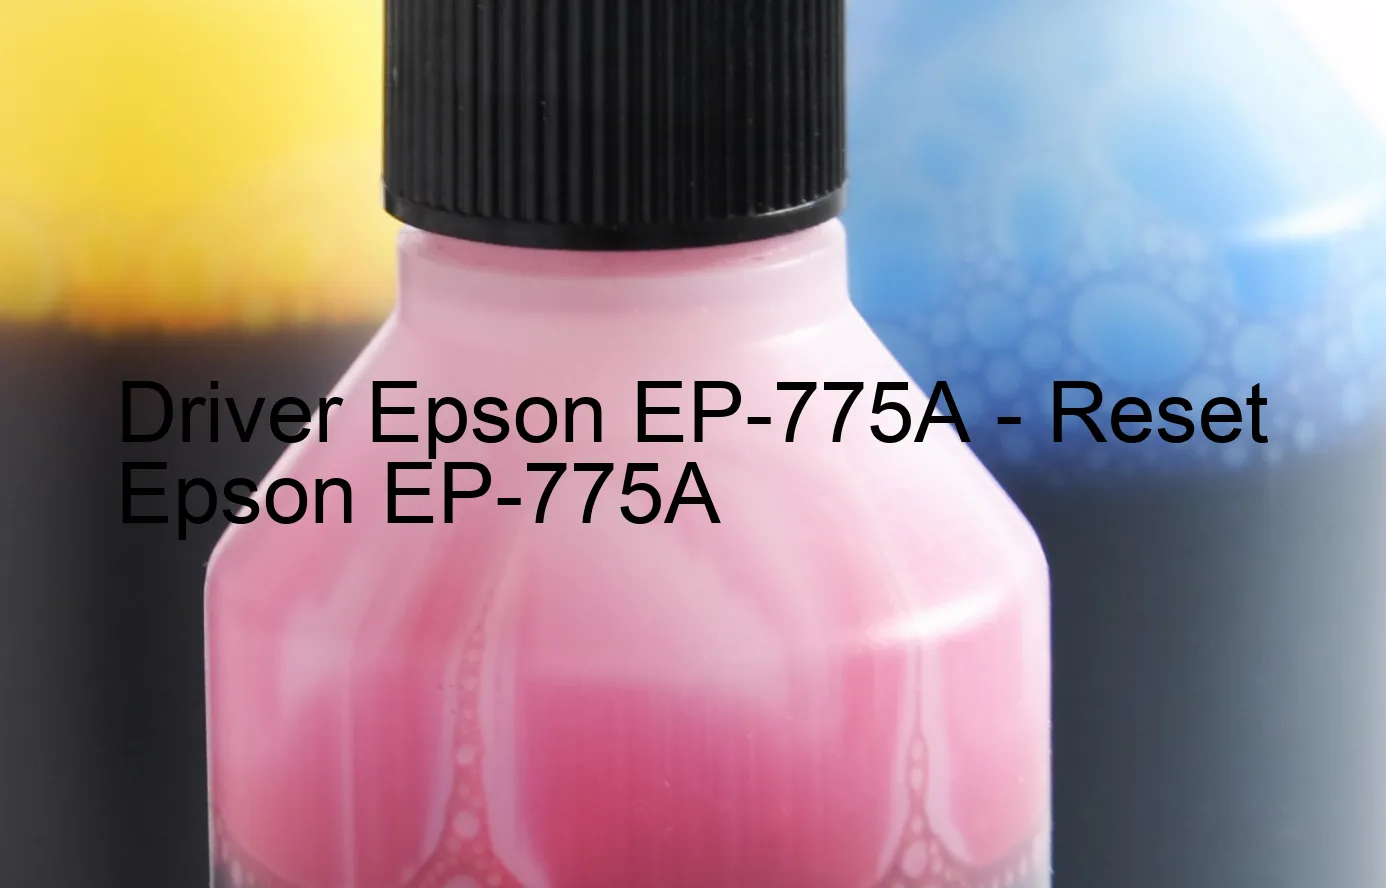 Epson EP-775Aのドライバー、Epson EP-775Aのリセットソフトウェア